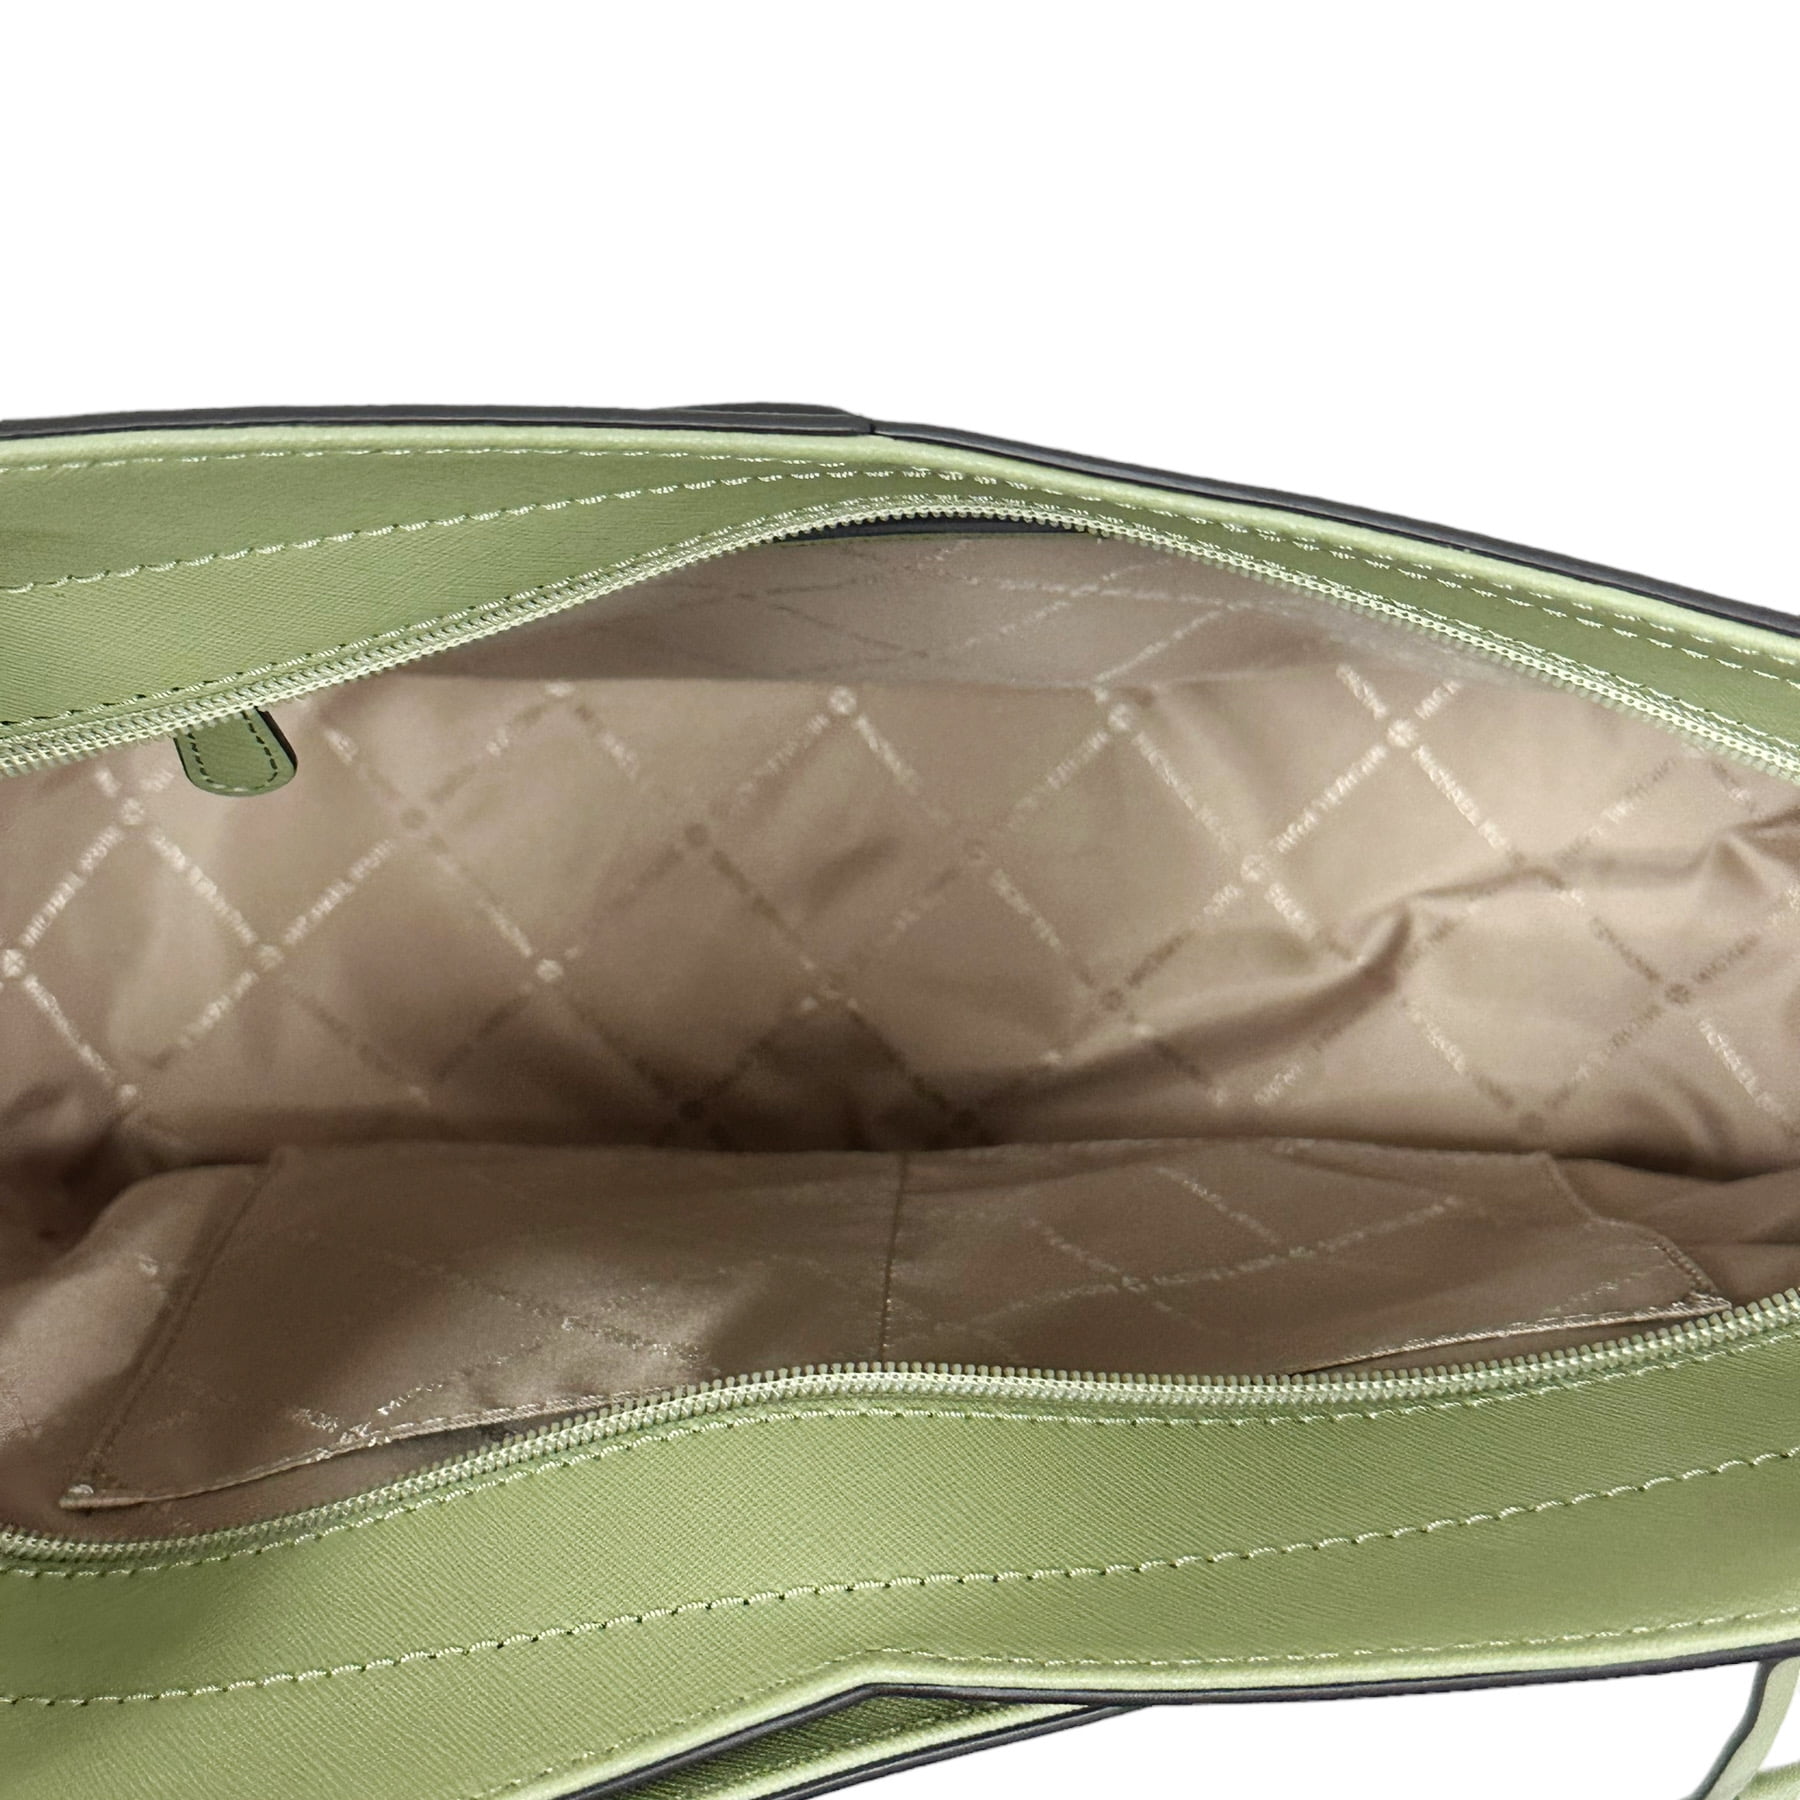 Totes bags Michael Kors - Jet Set saffiano leather tote - 30F4GTVT7M